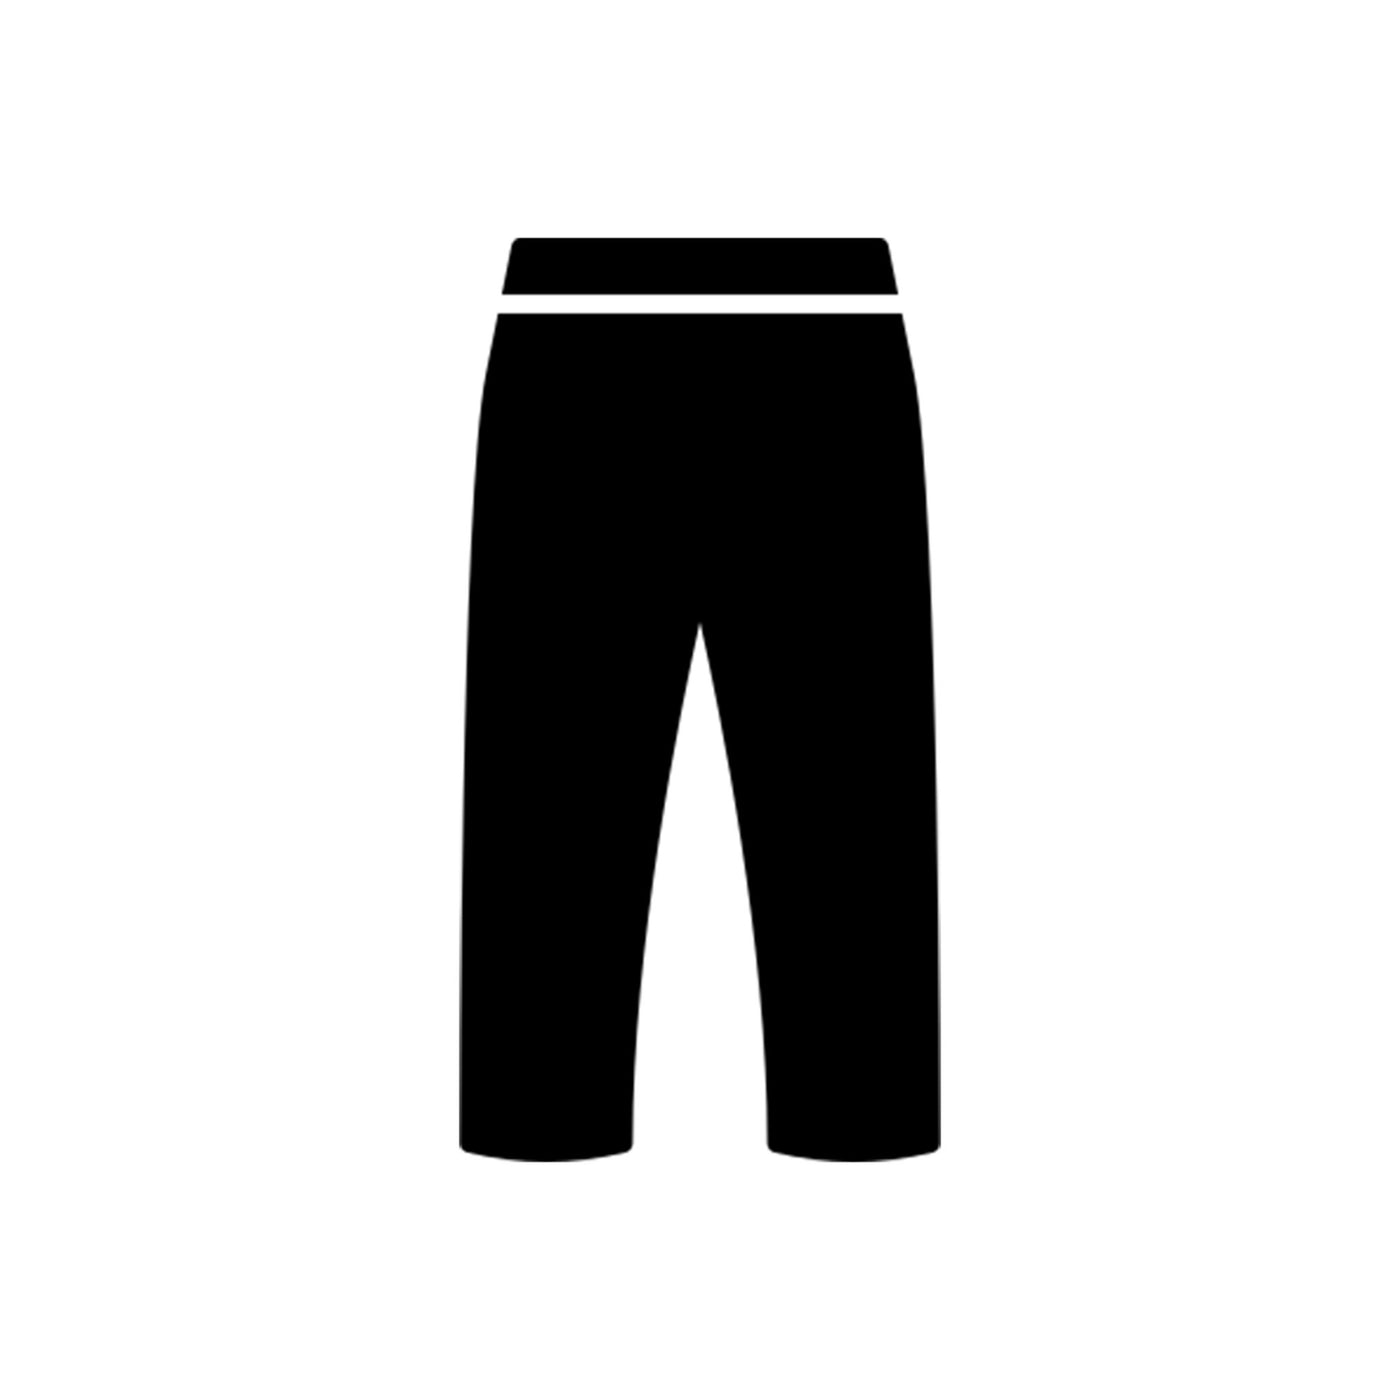 Sport pants for women